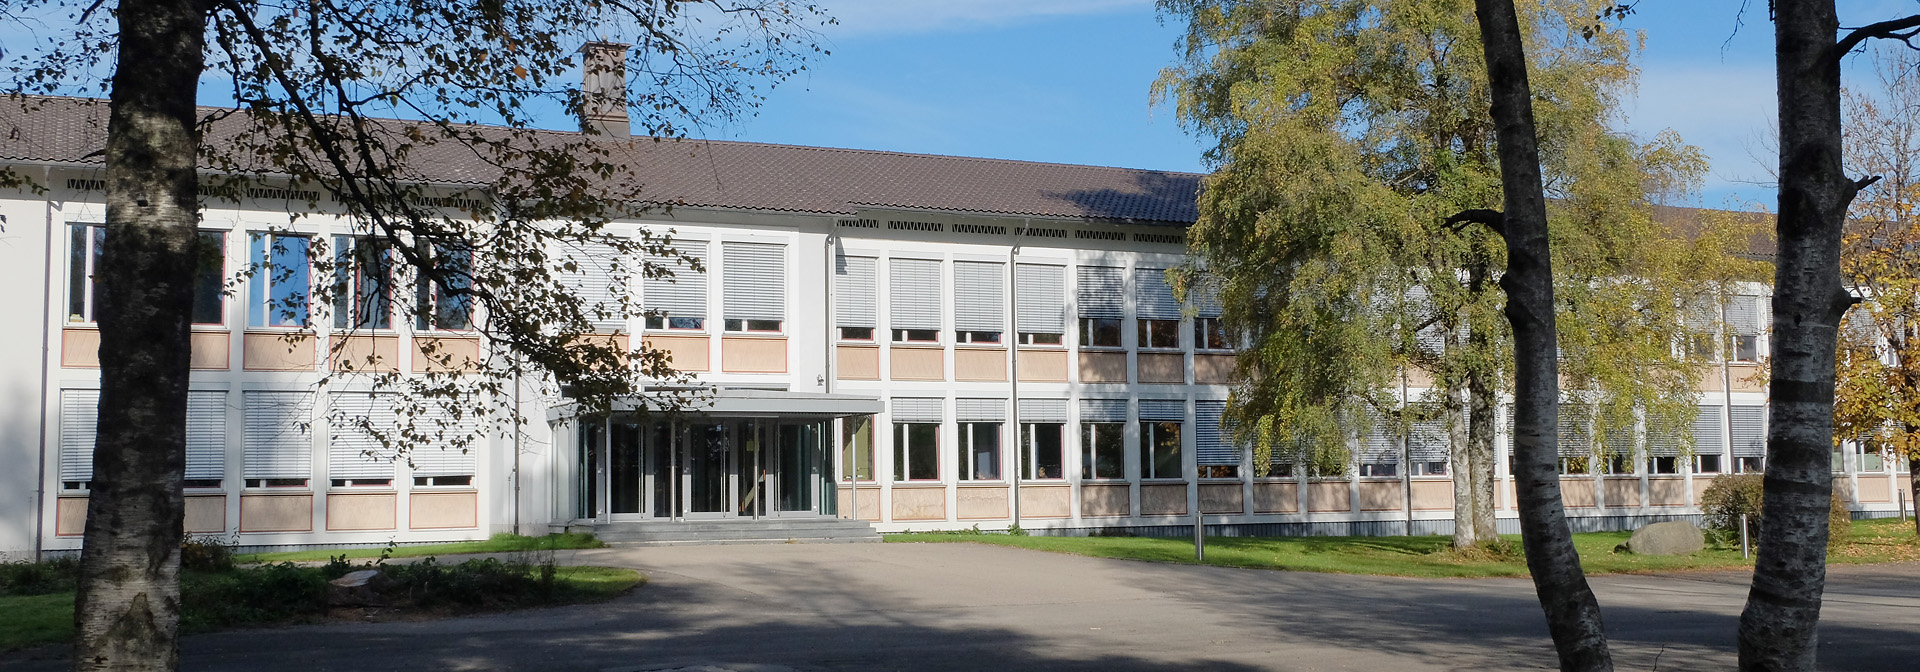 School building: The building and the school yard of the Lindenberg grammar school.